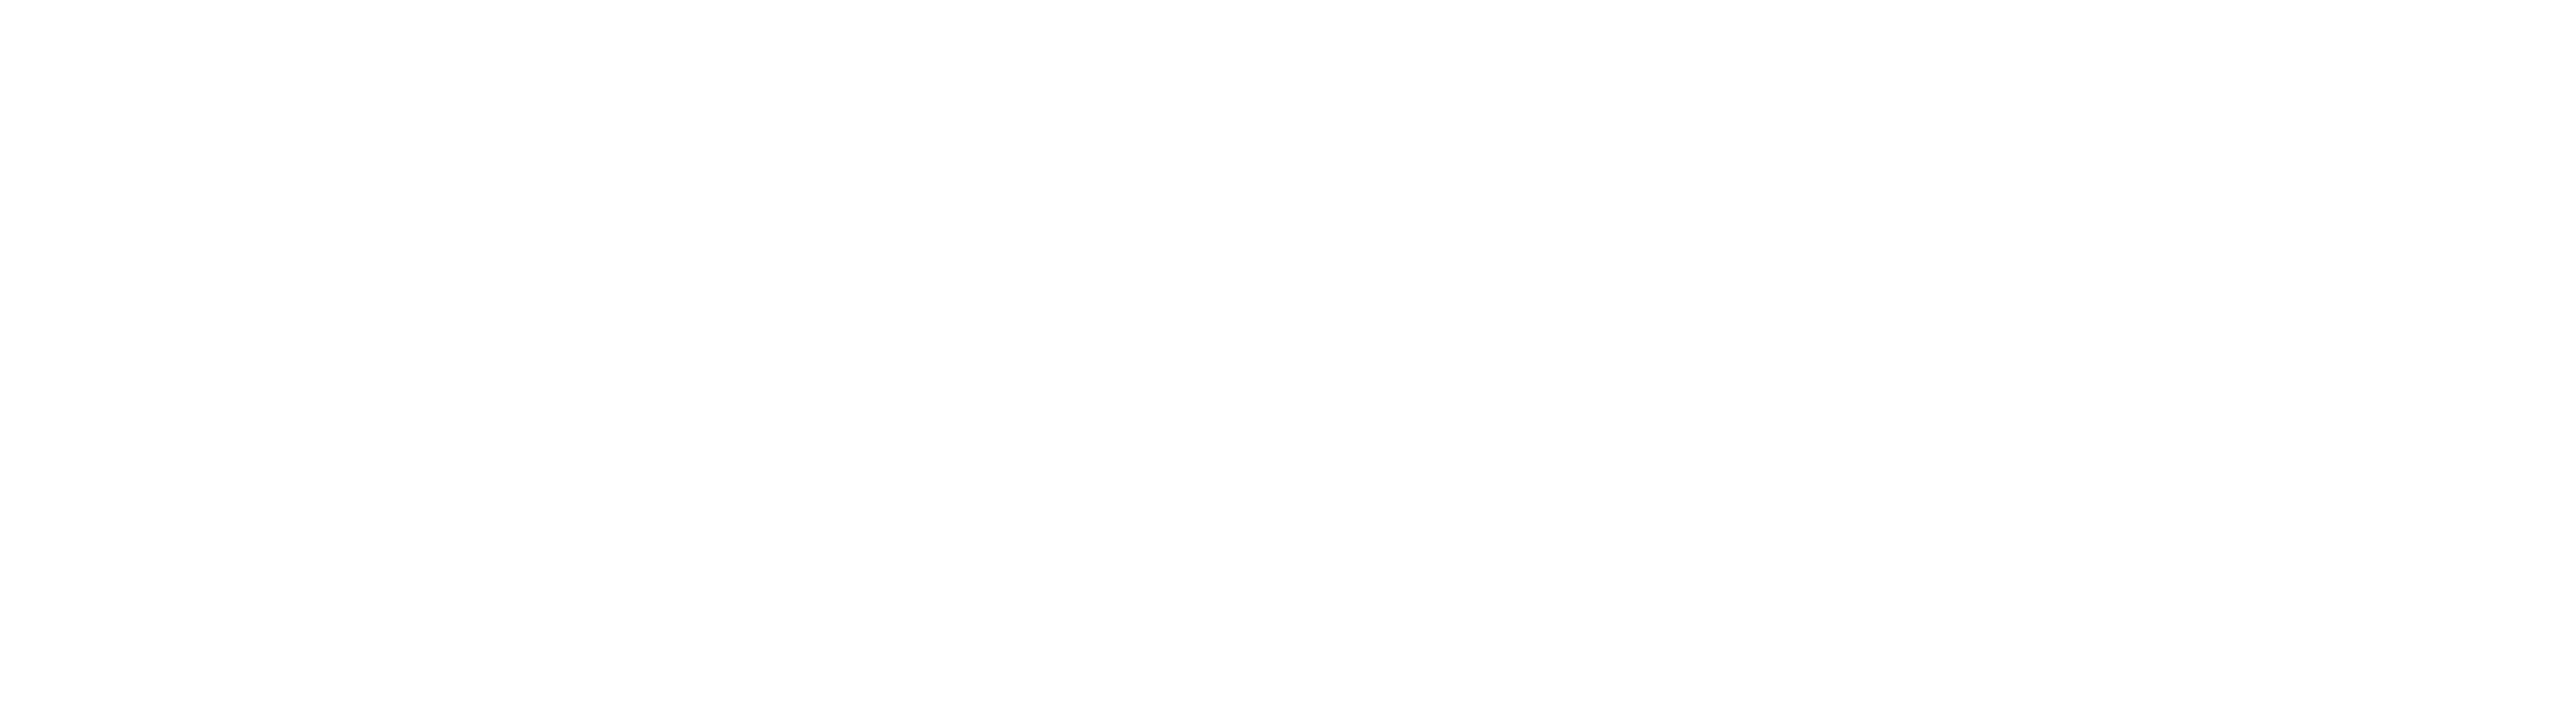 ARKON OFF-ROAD Logo